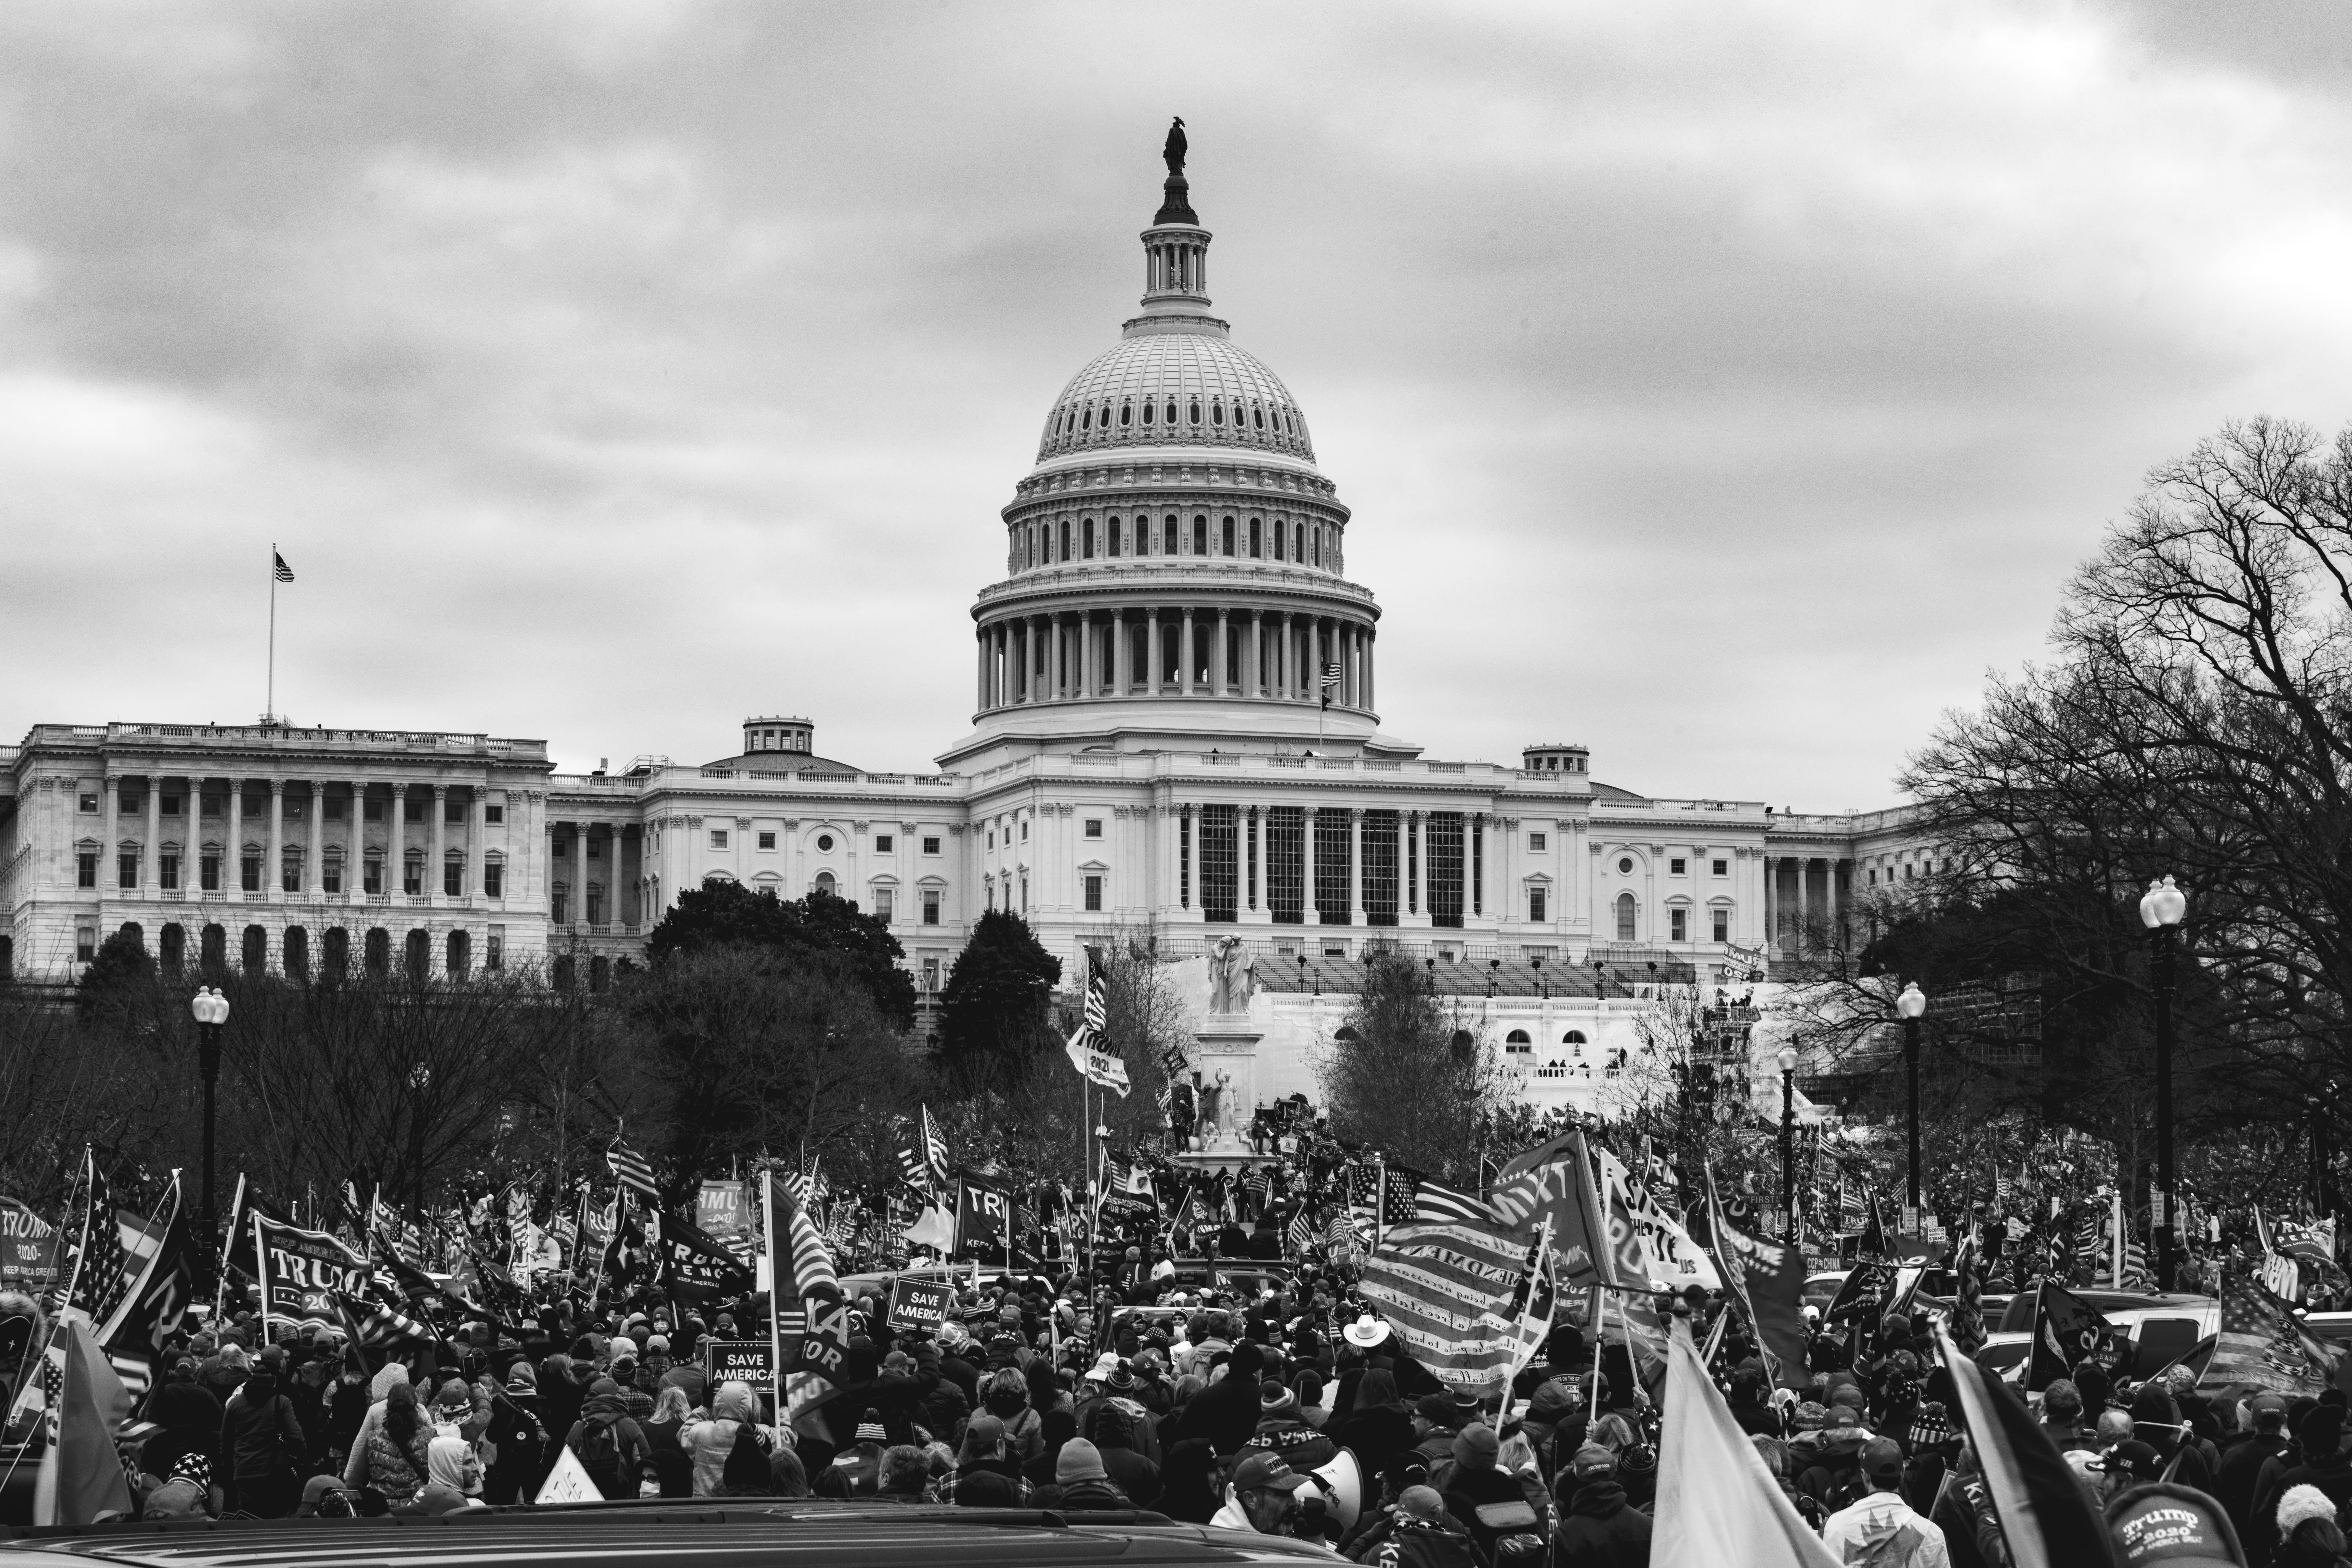 Scene of U.S. Capitol Riot